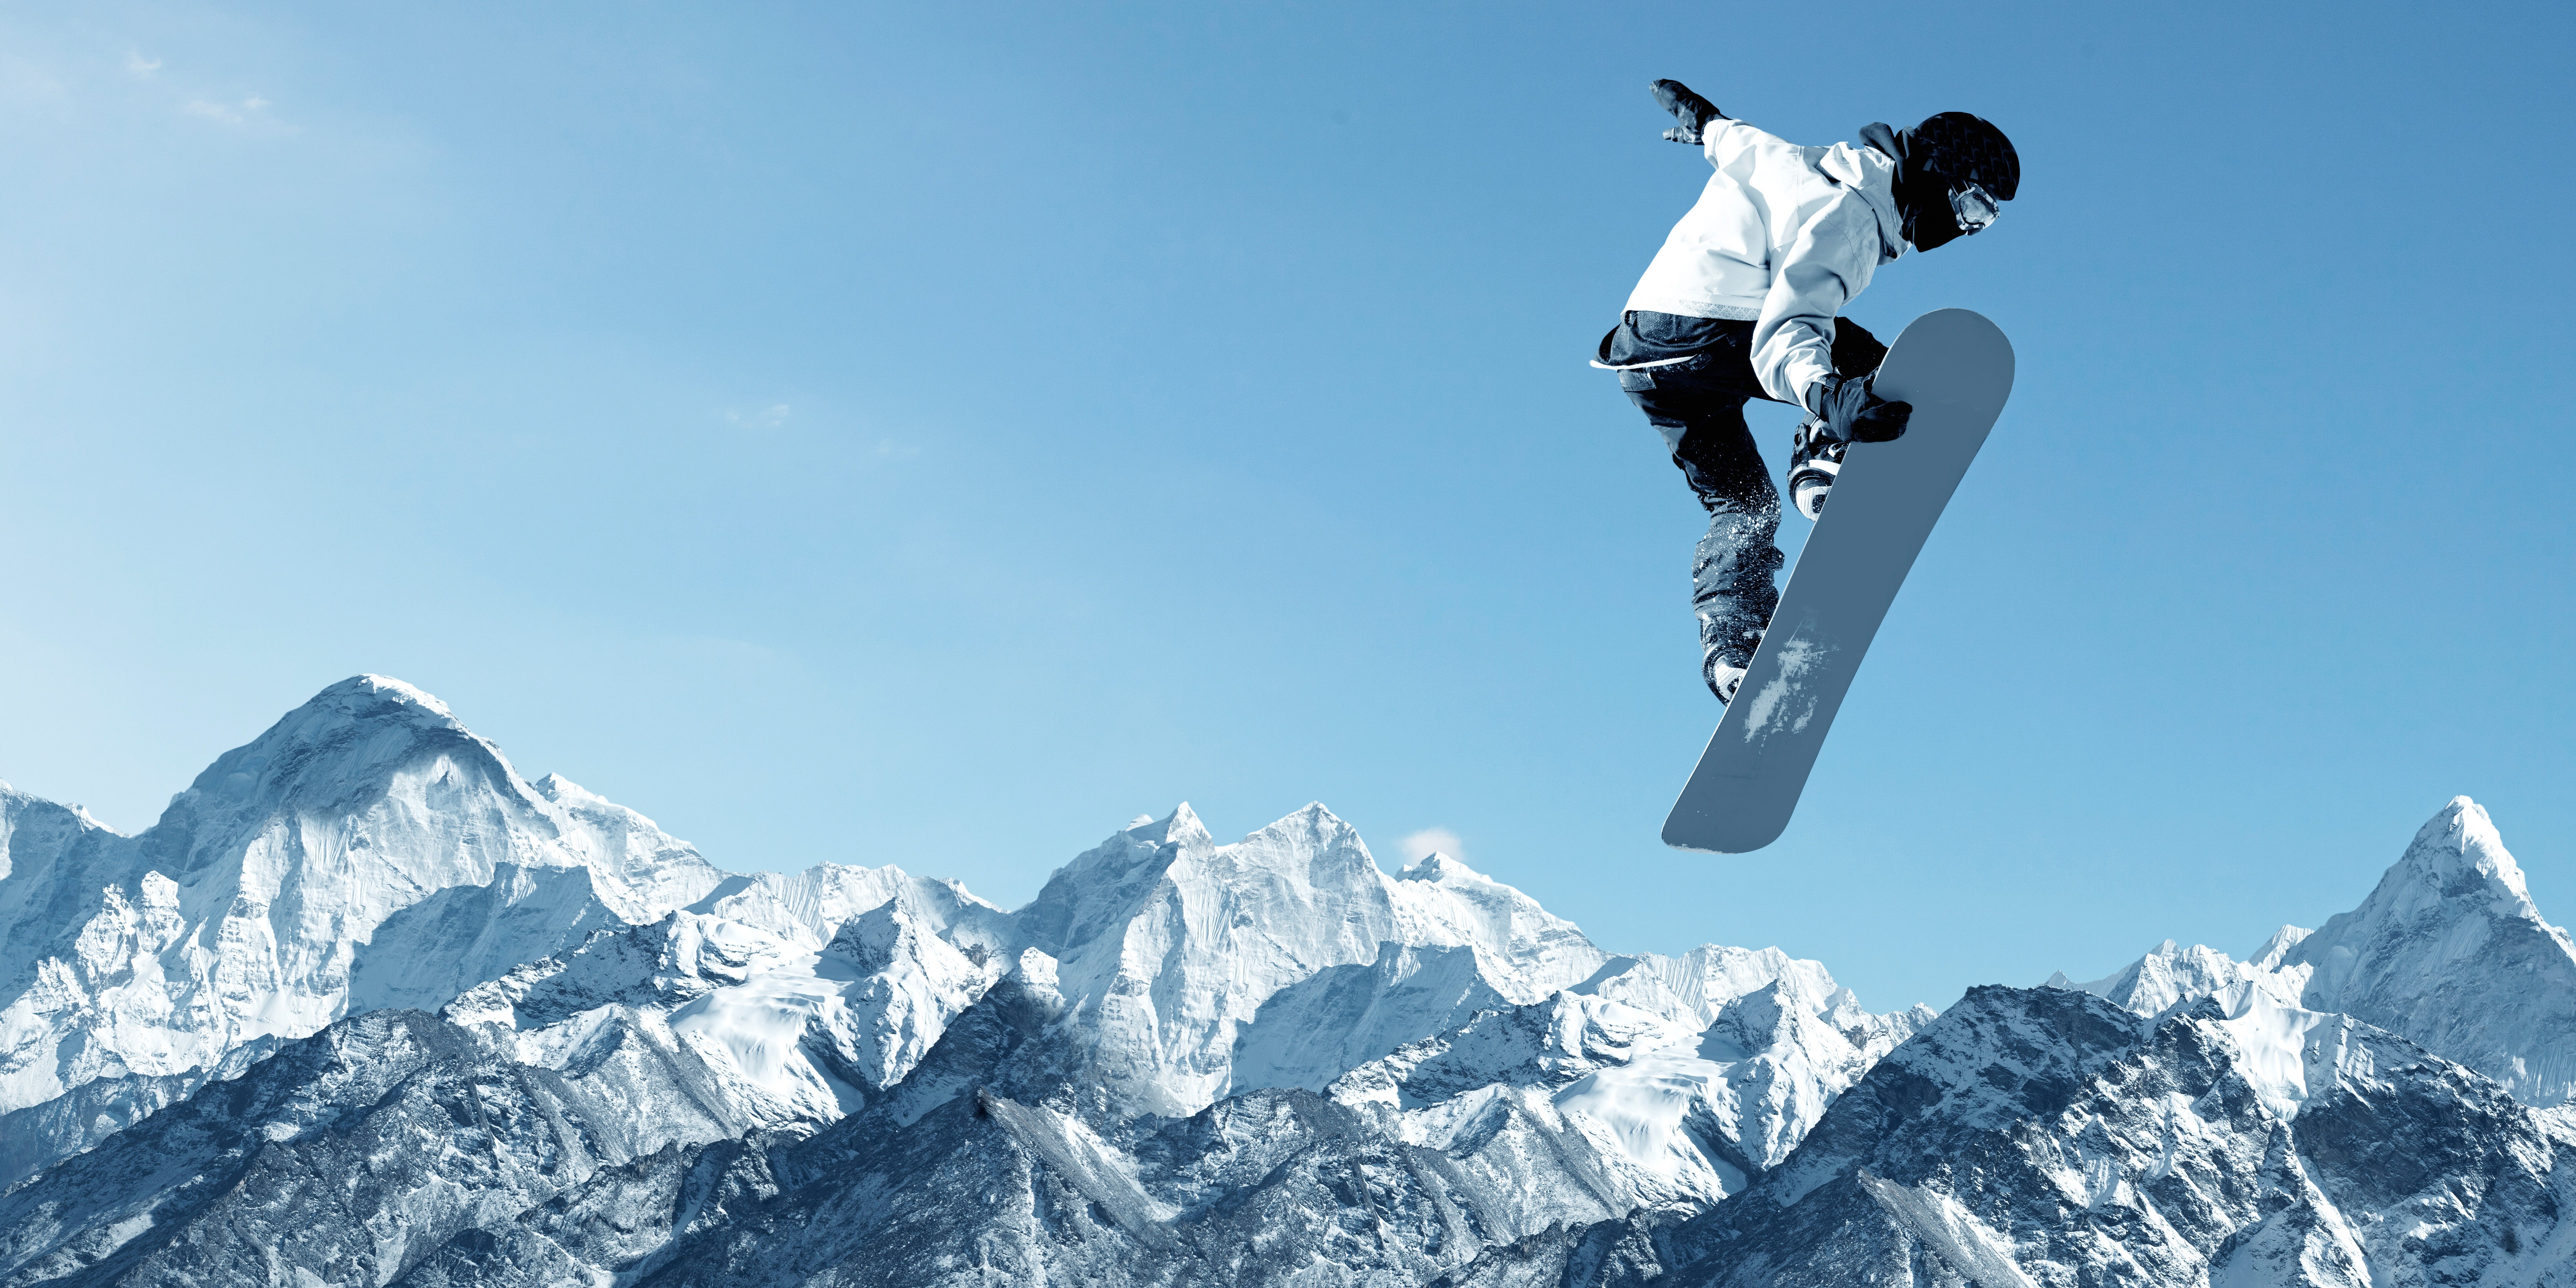 Snowboarding 4K wallpaper download